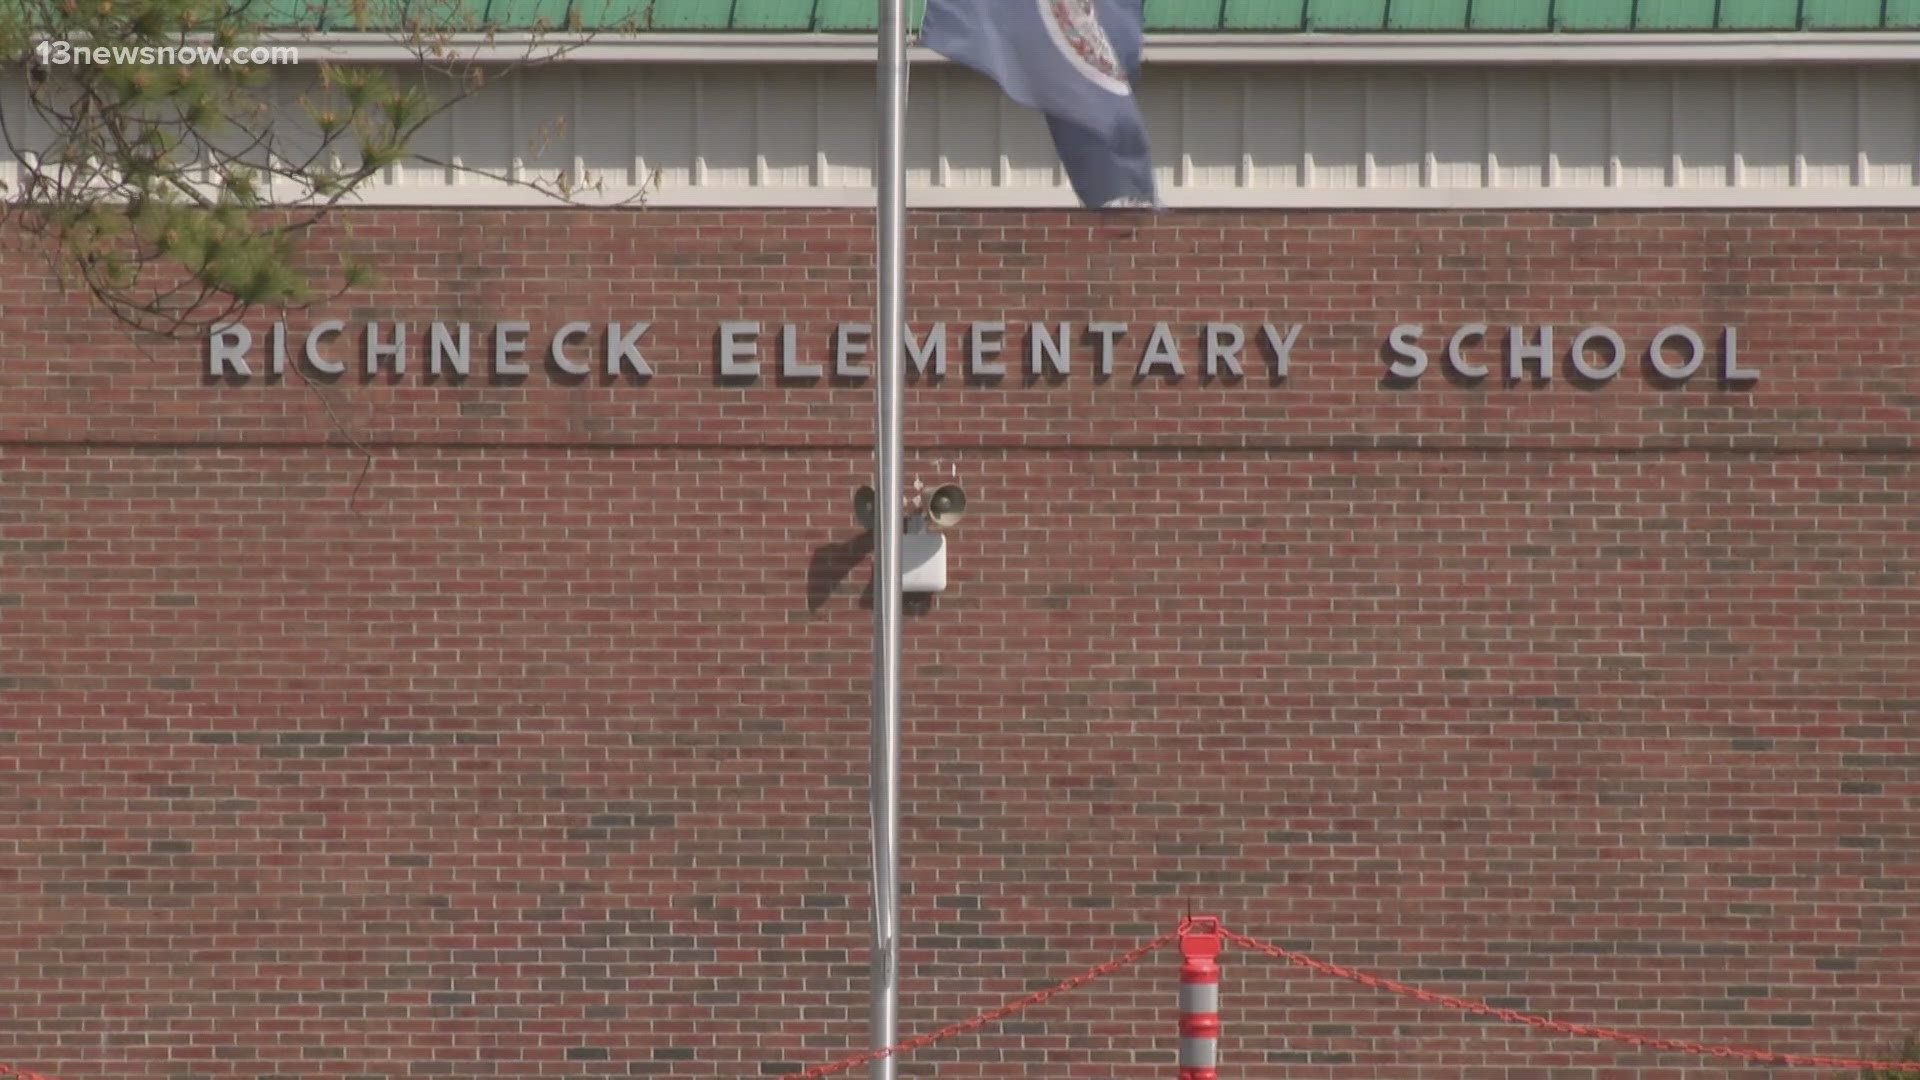 School board members announced Sedgefield Elementary School Principal, Jacky Barber, will serve as the new principal for Richneck Elementary School next year.